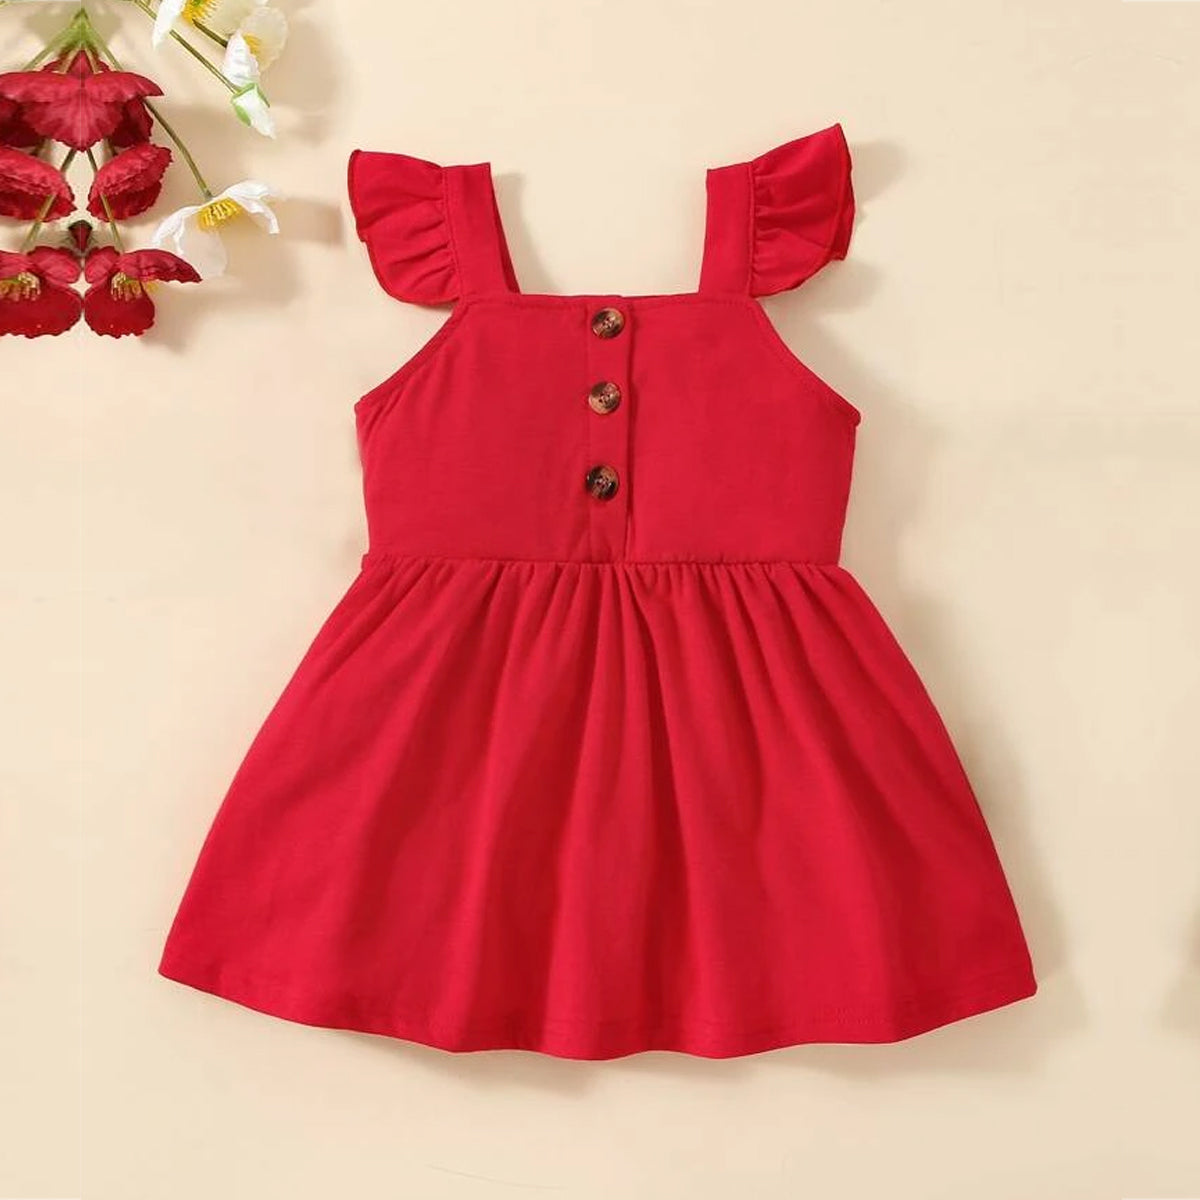 BabyGirl's Cotton Designer Ruffle Trim Button Frocks & Dresses for Kids.